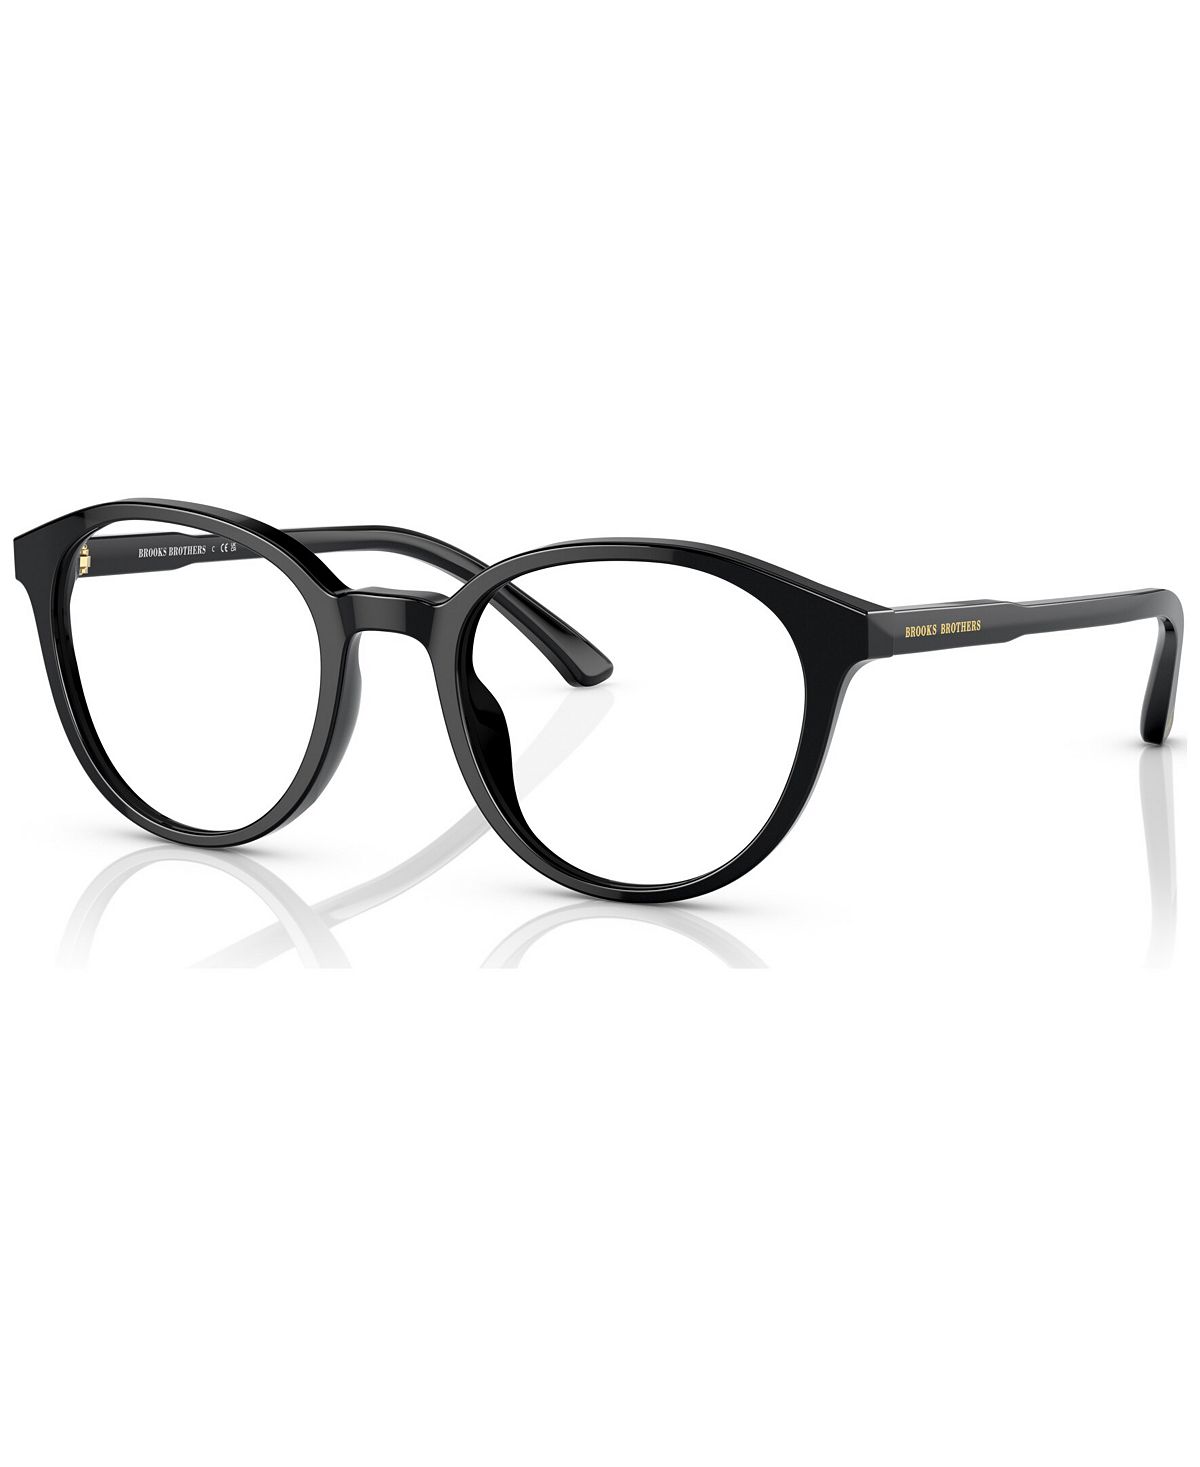 Мужские очки Phantos, BB205549-O Brooks Brothers цена и фото